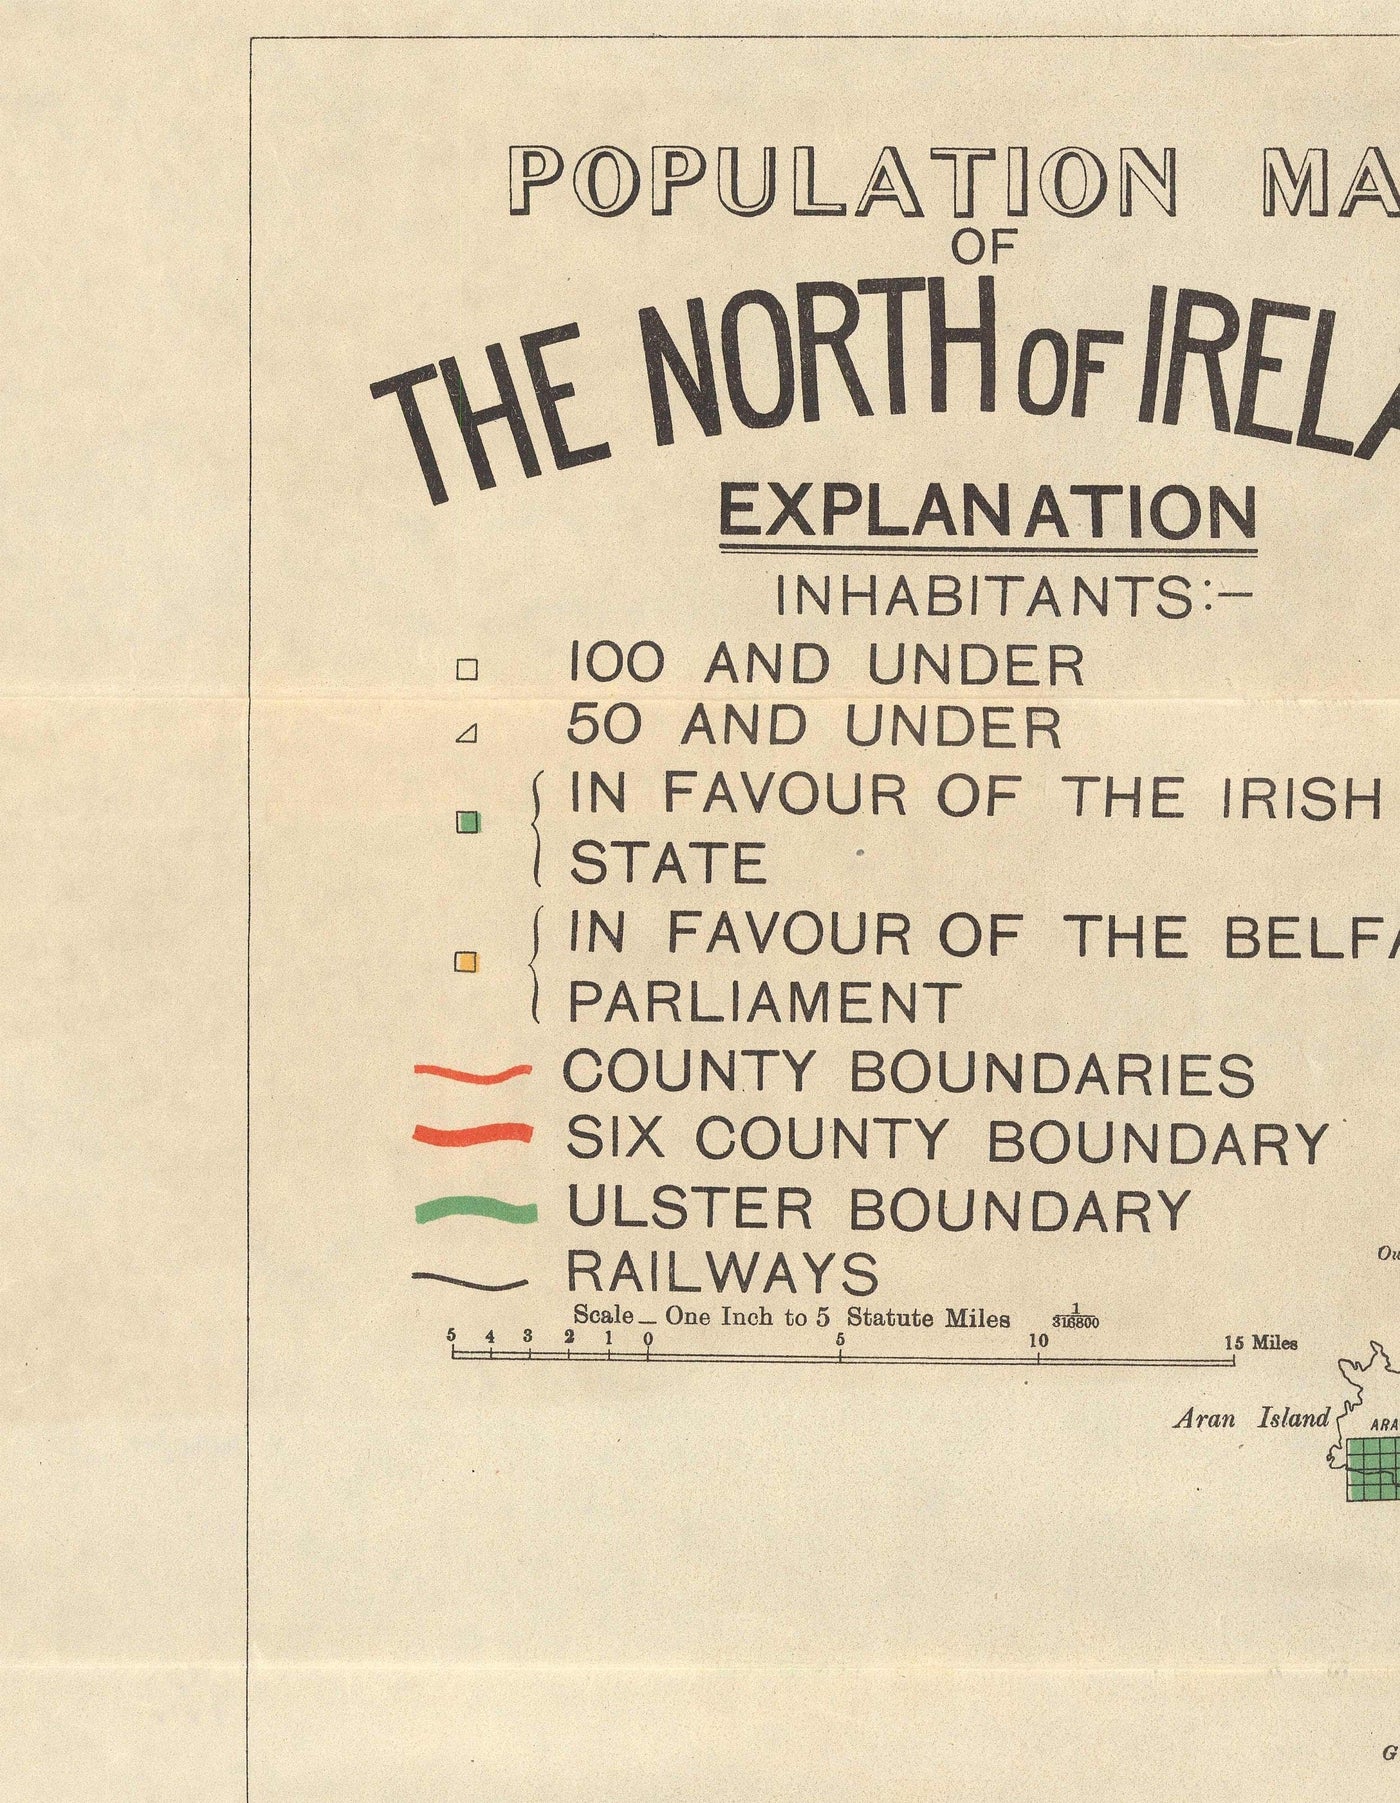 Old Map of Northern Ireland, Ulster in 1923 - Irish Free State, Anglo-Irish Treaty Population Chart